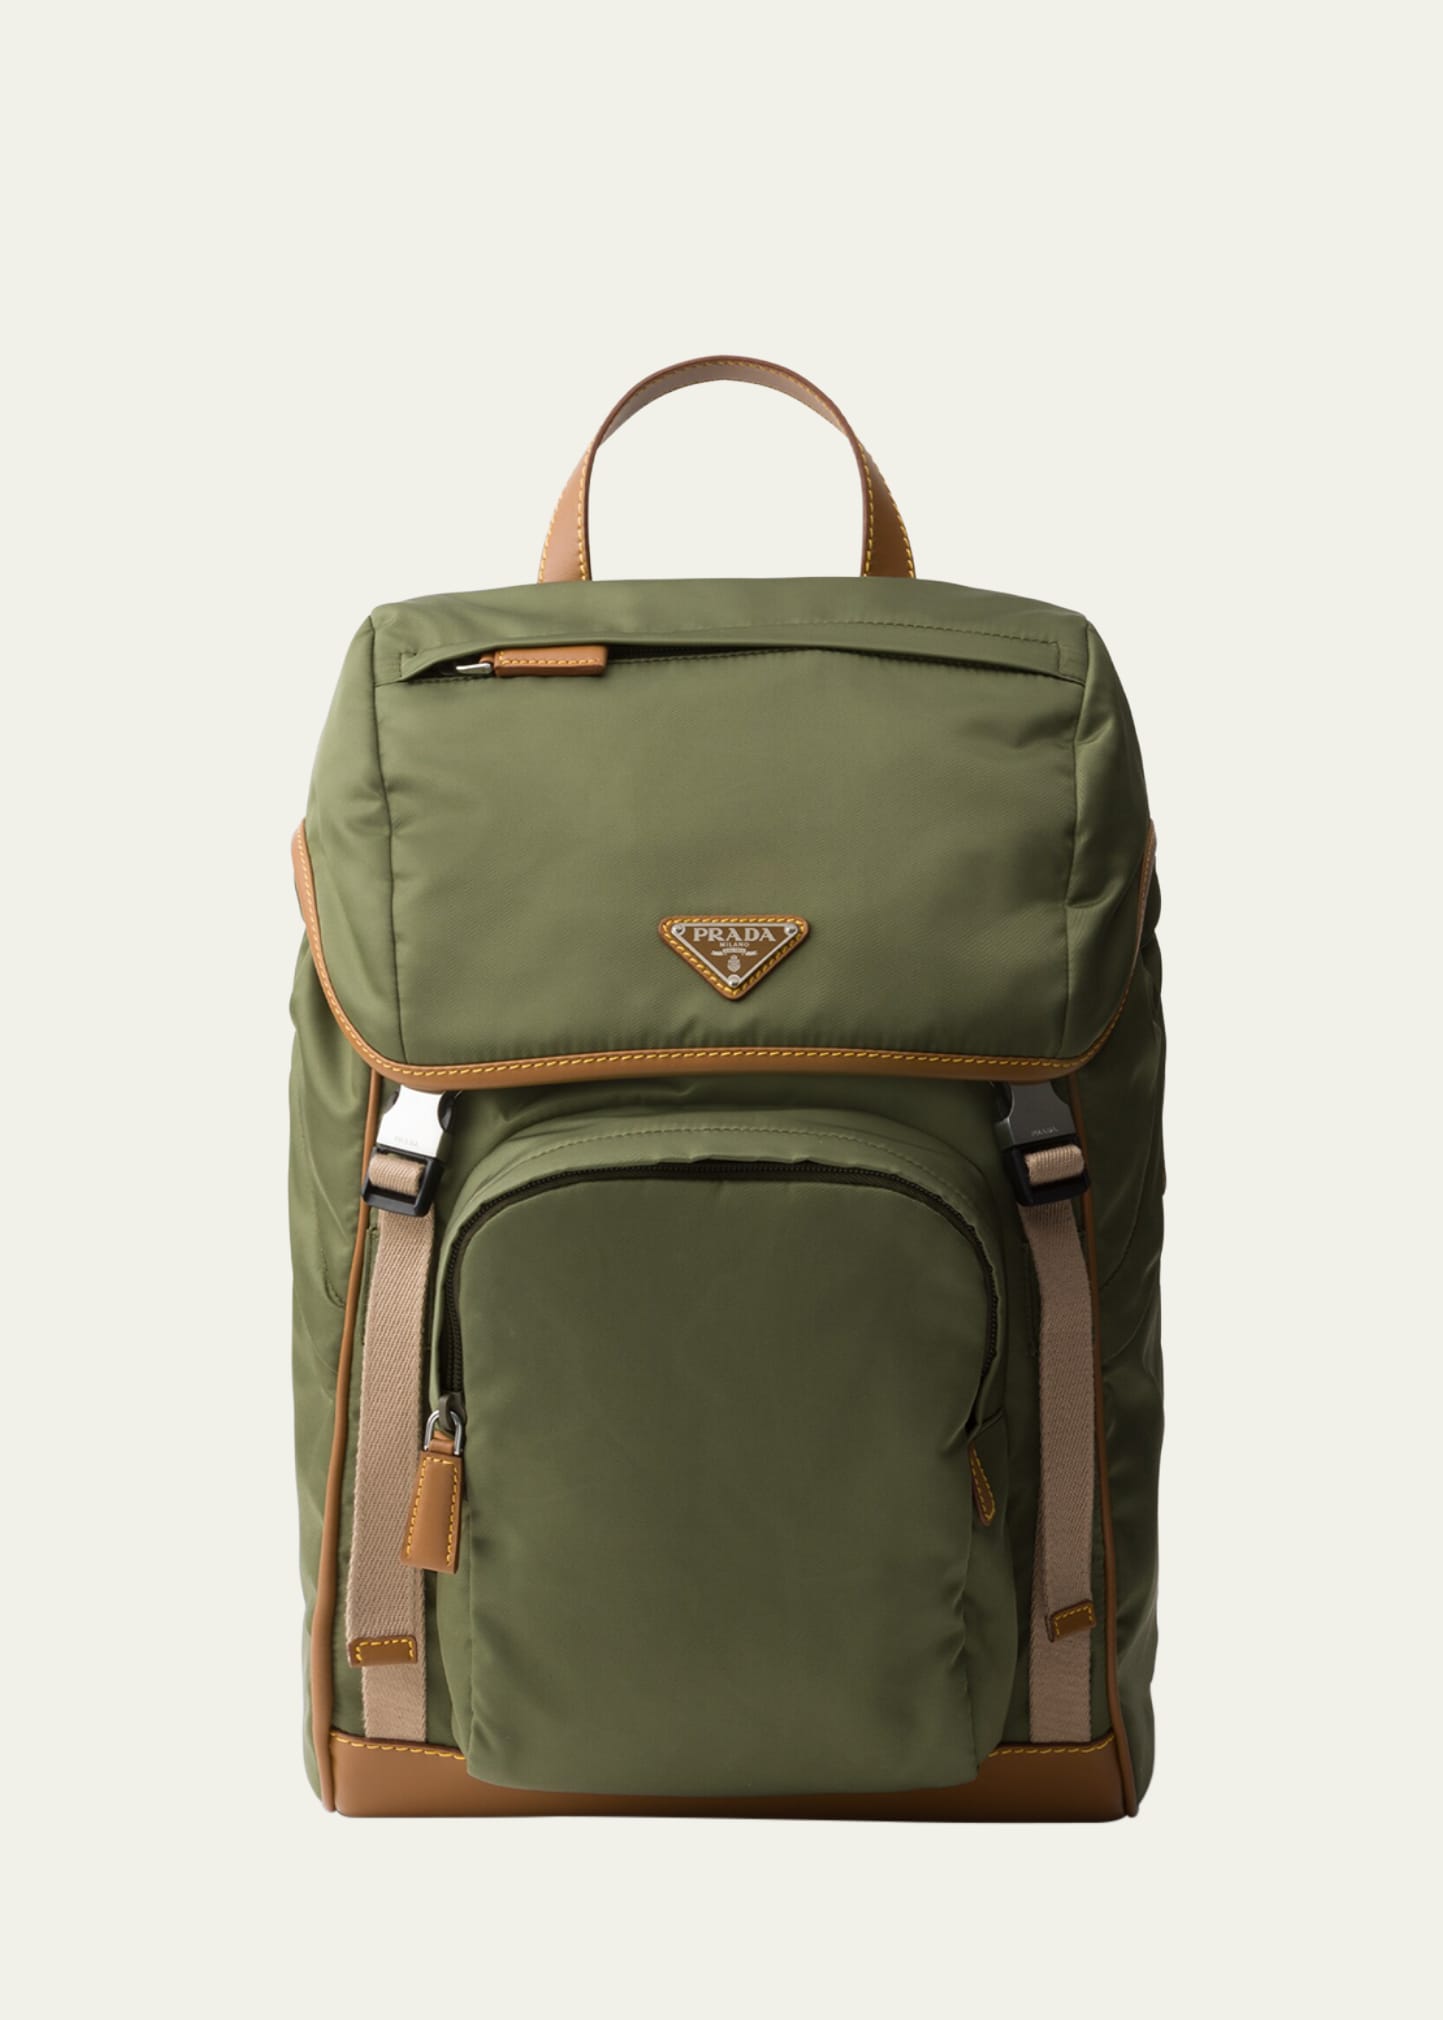 Prada Men's Recycled Nylon And Leather Backpack In F03uq Militarecar